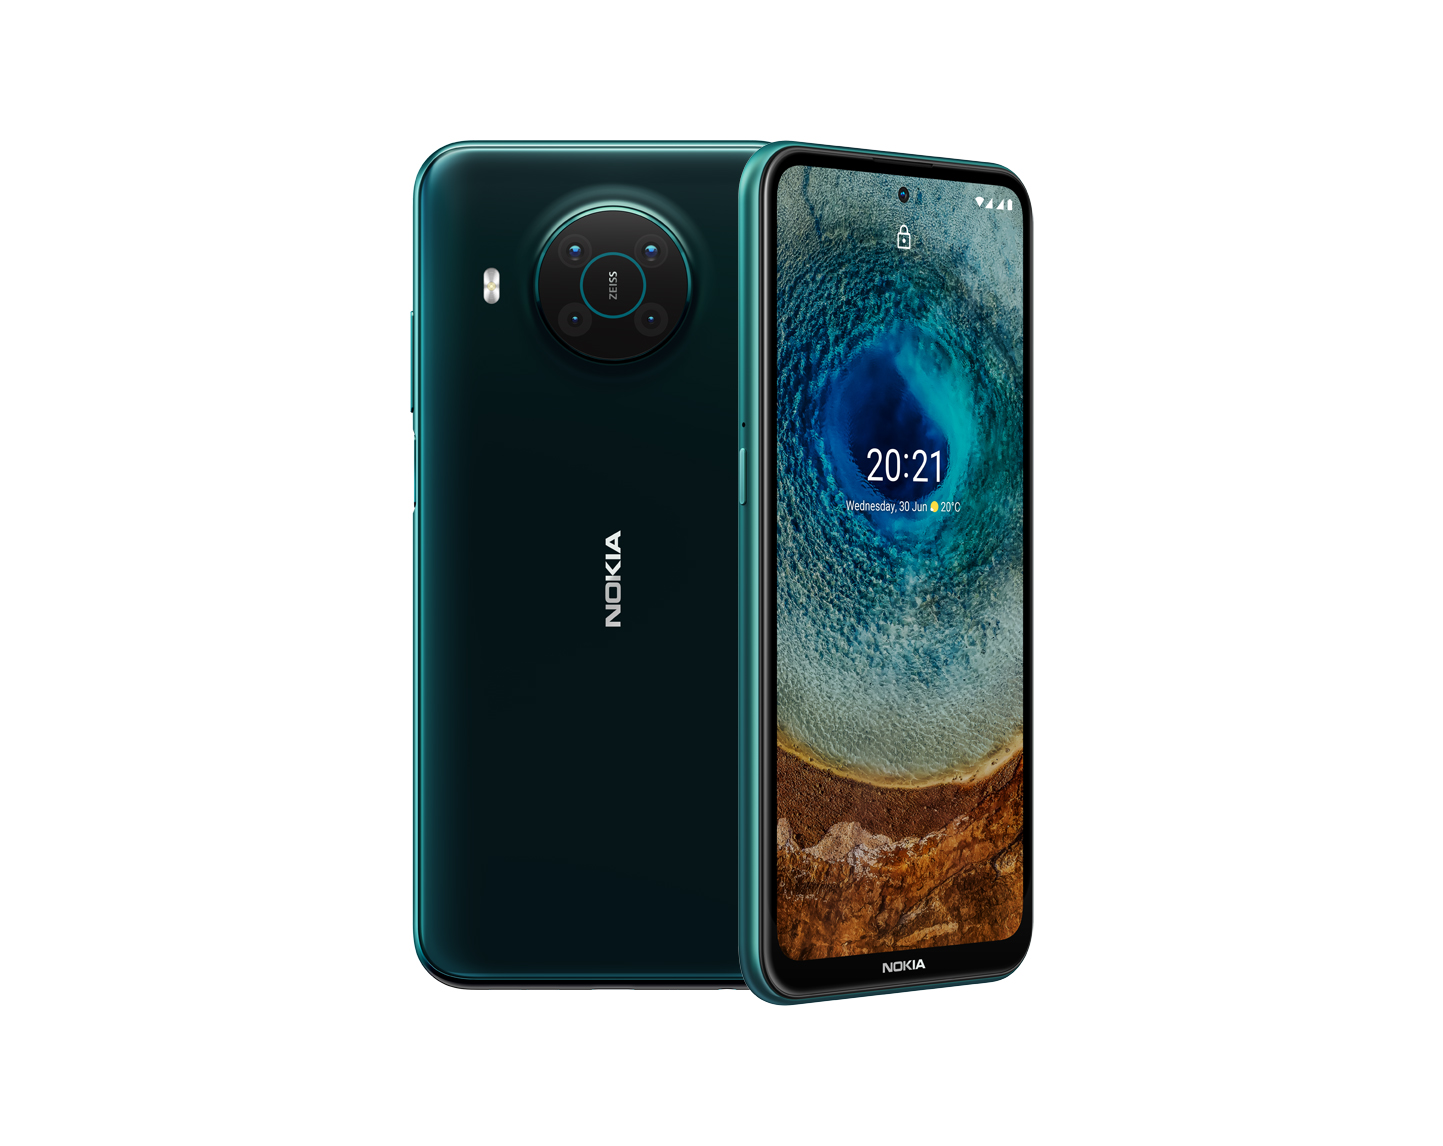 Nokia X10 smartphone review: Reliable 5G phone with four cameras -  NotebookCheck.net Reviews